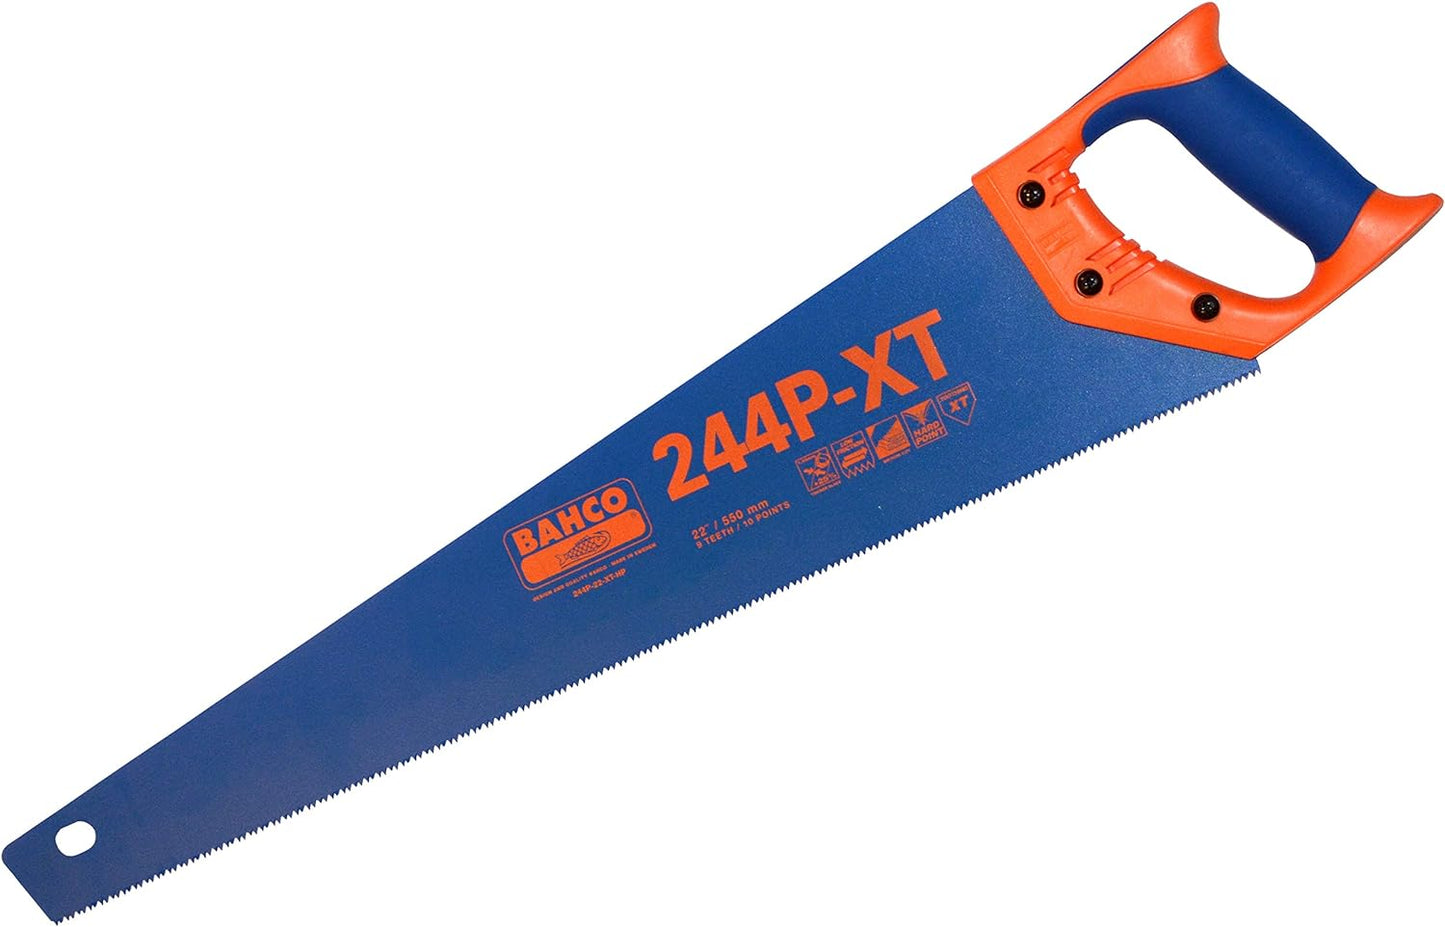 Bahco 244P-22-XT-HP 244P-22-XT Blue XT Handsaw 22in 9 TPI